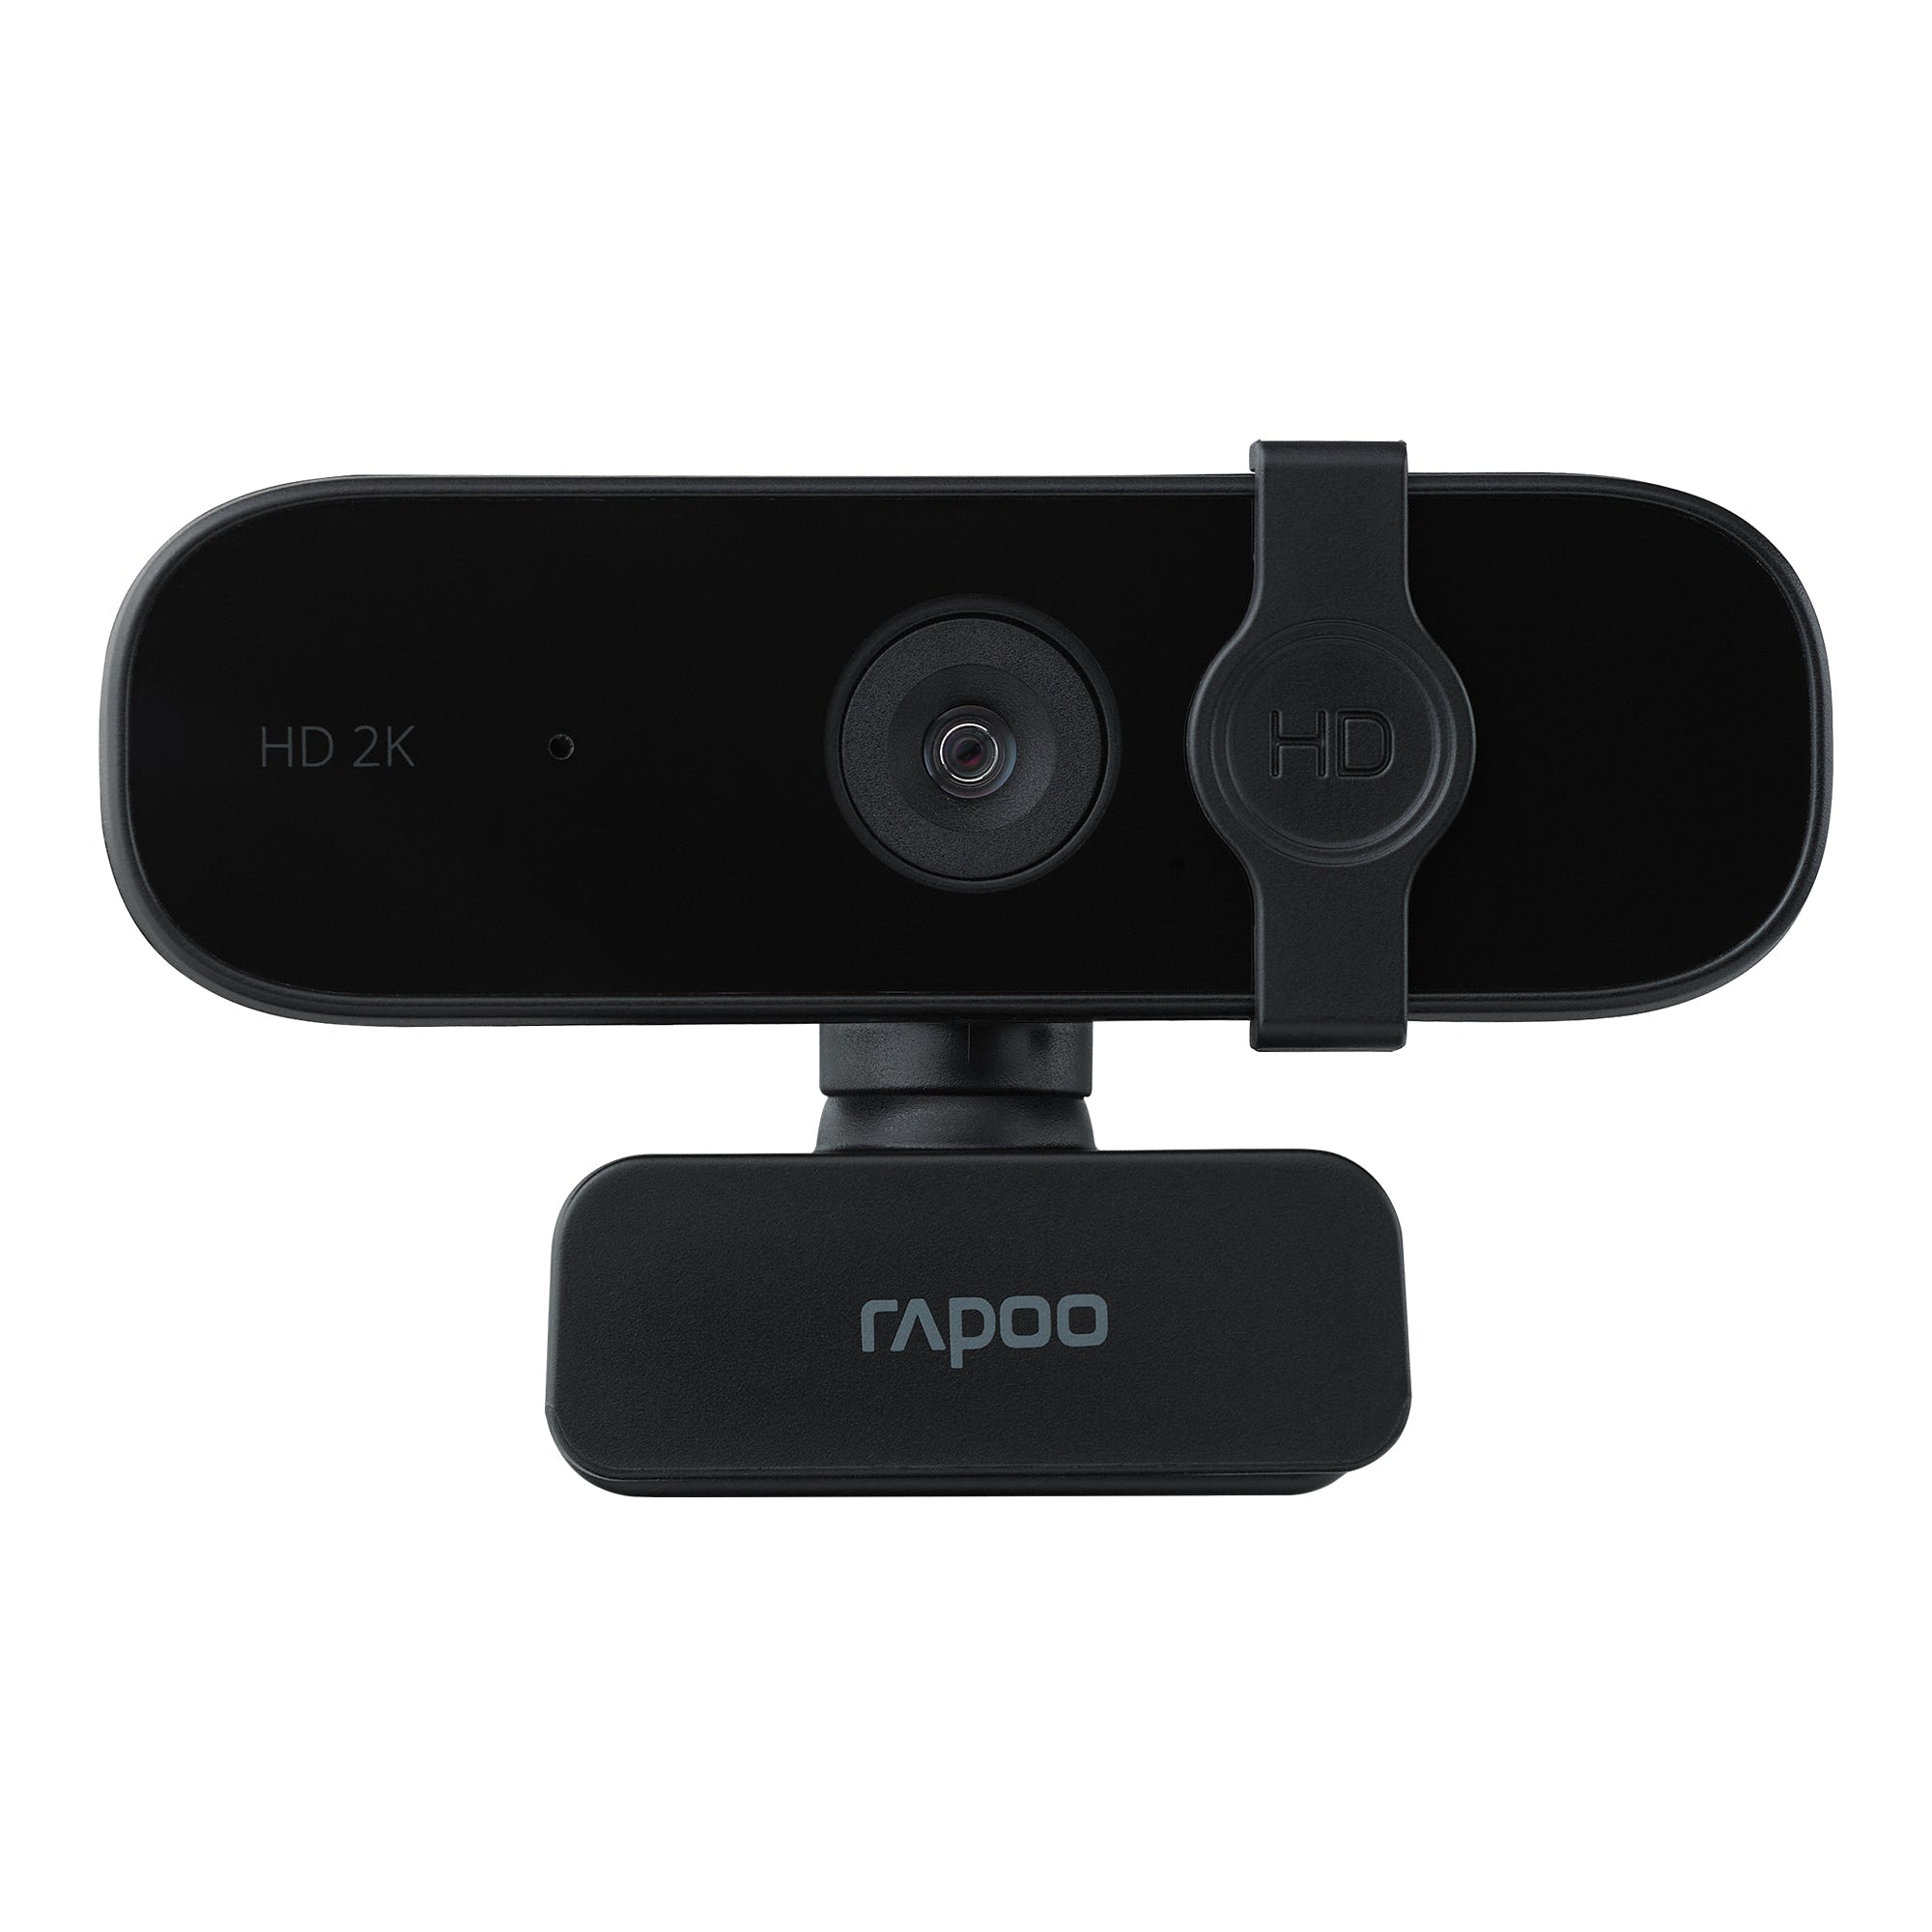 Rapoo XW2K HD 2K 30 FPS USB 2.0 VGA Webcam, Black